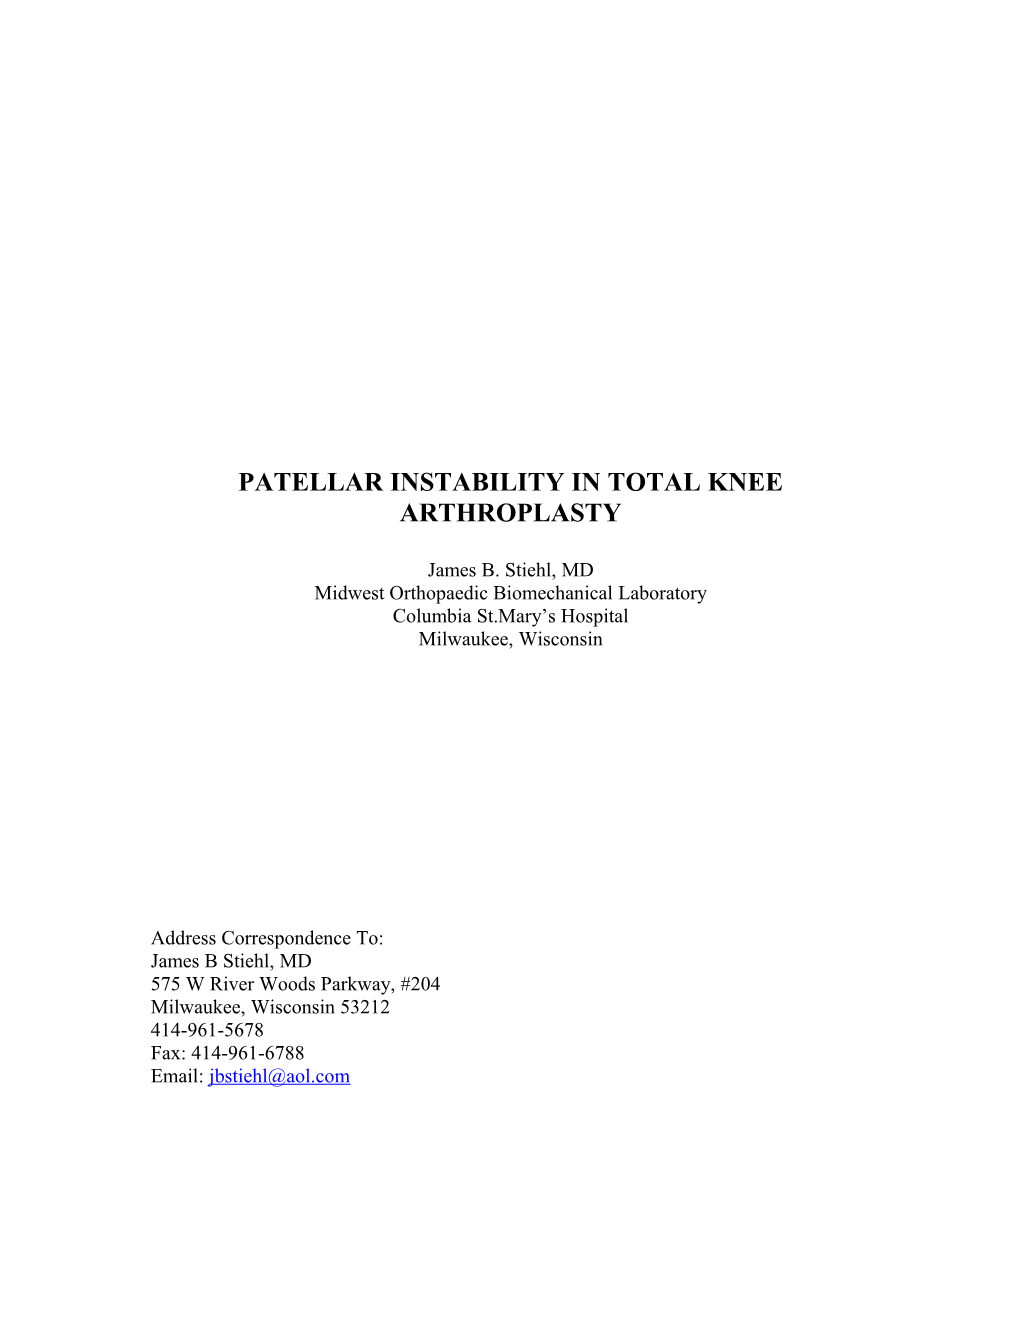 Patellar Instability in Total Knee Arthroplasty